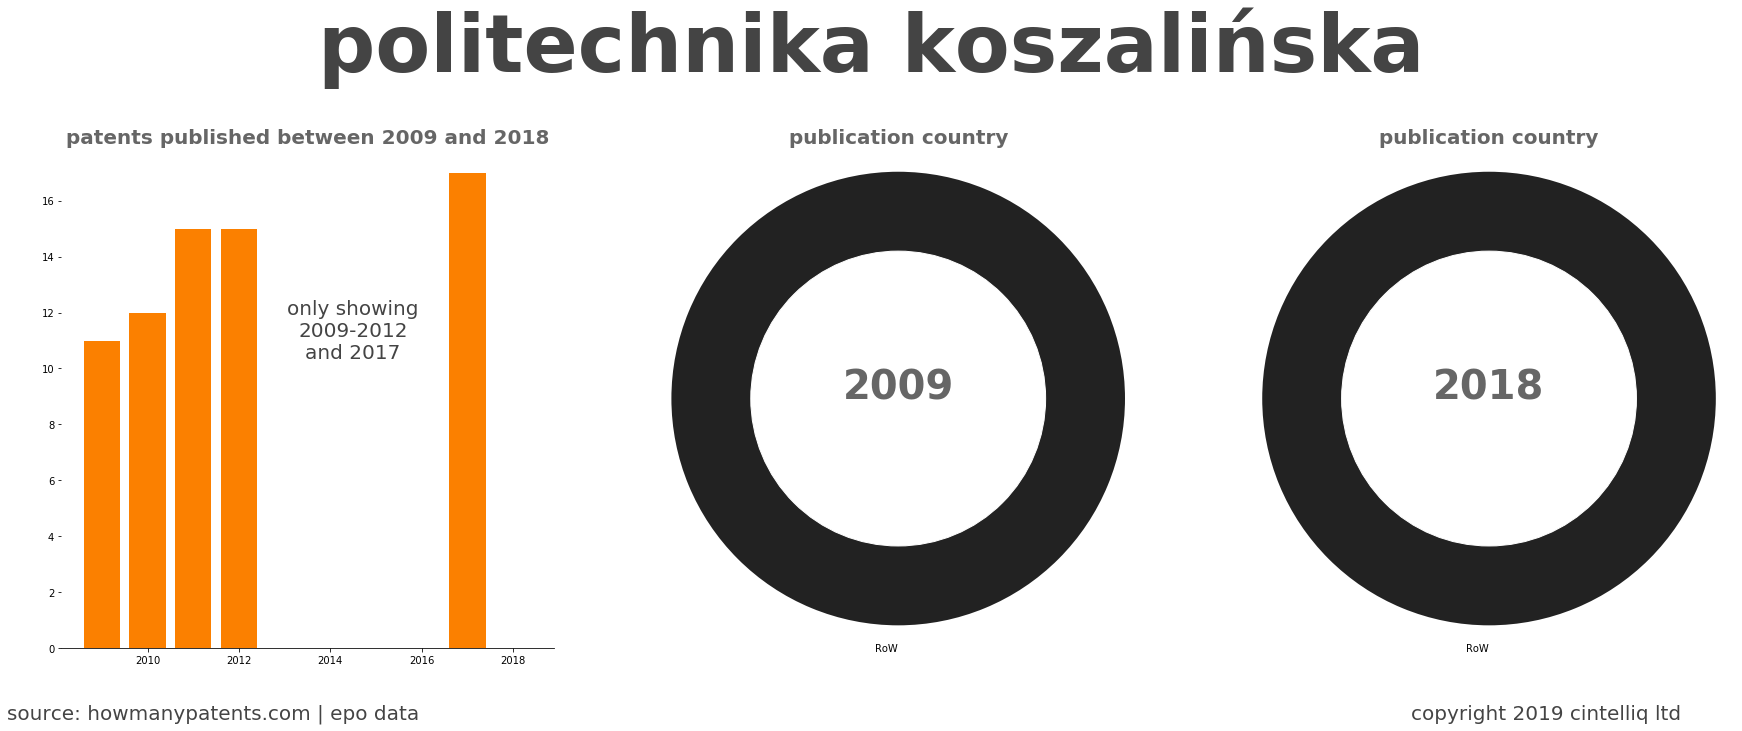 summary of patents for Politechnika Koszalińska